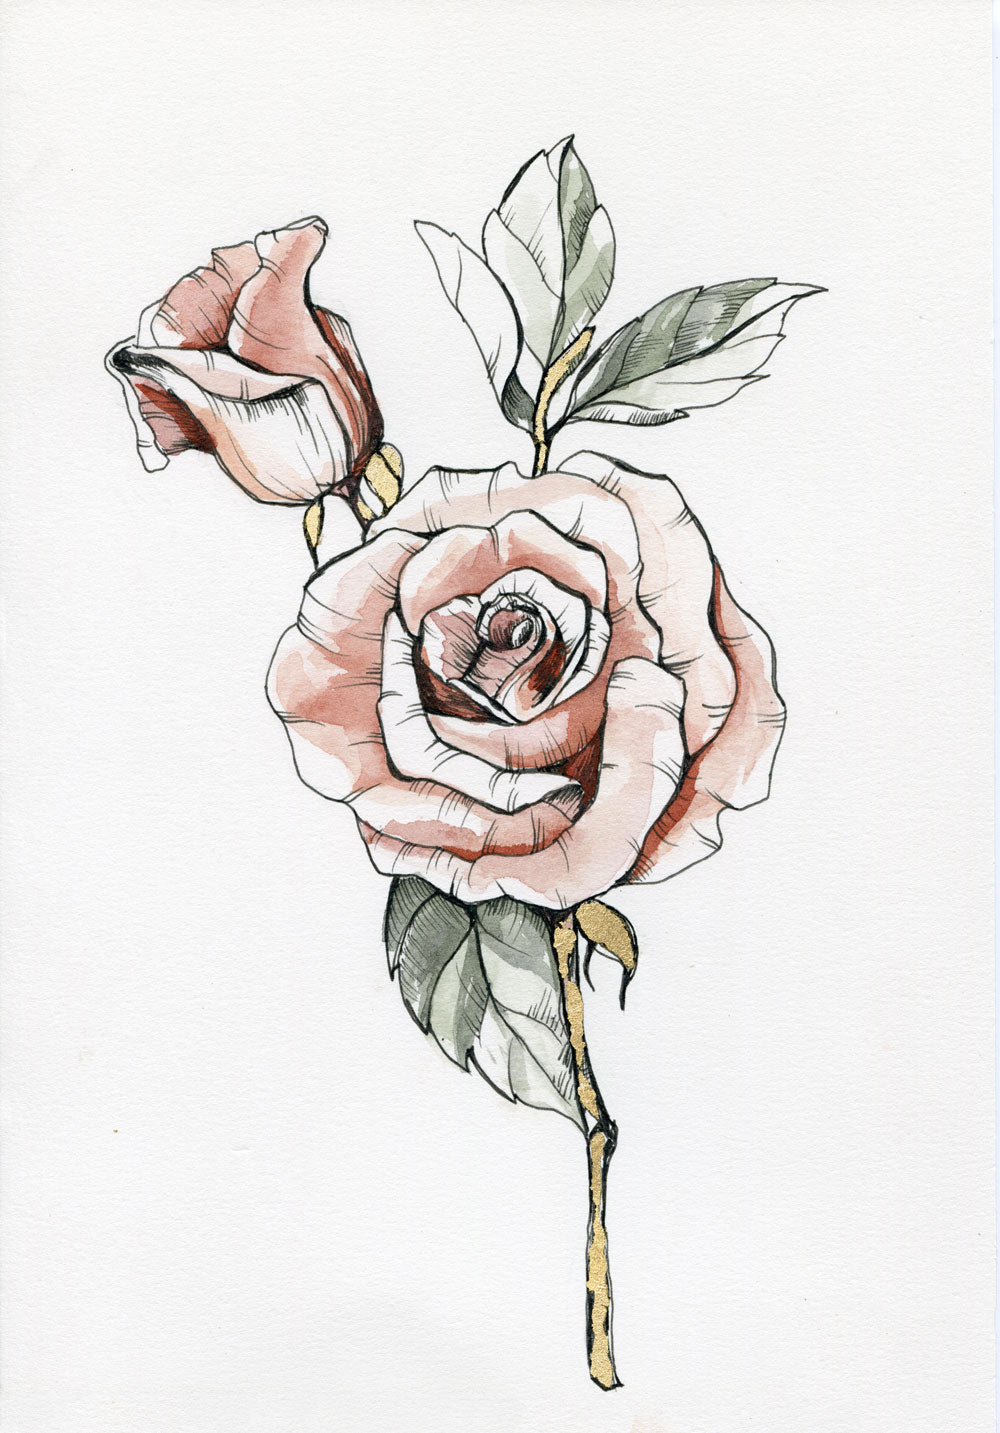 Day 10 - Rose